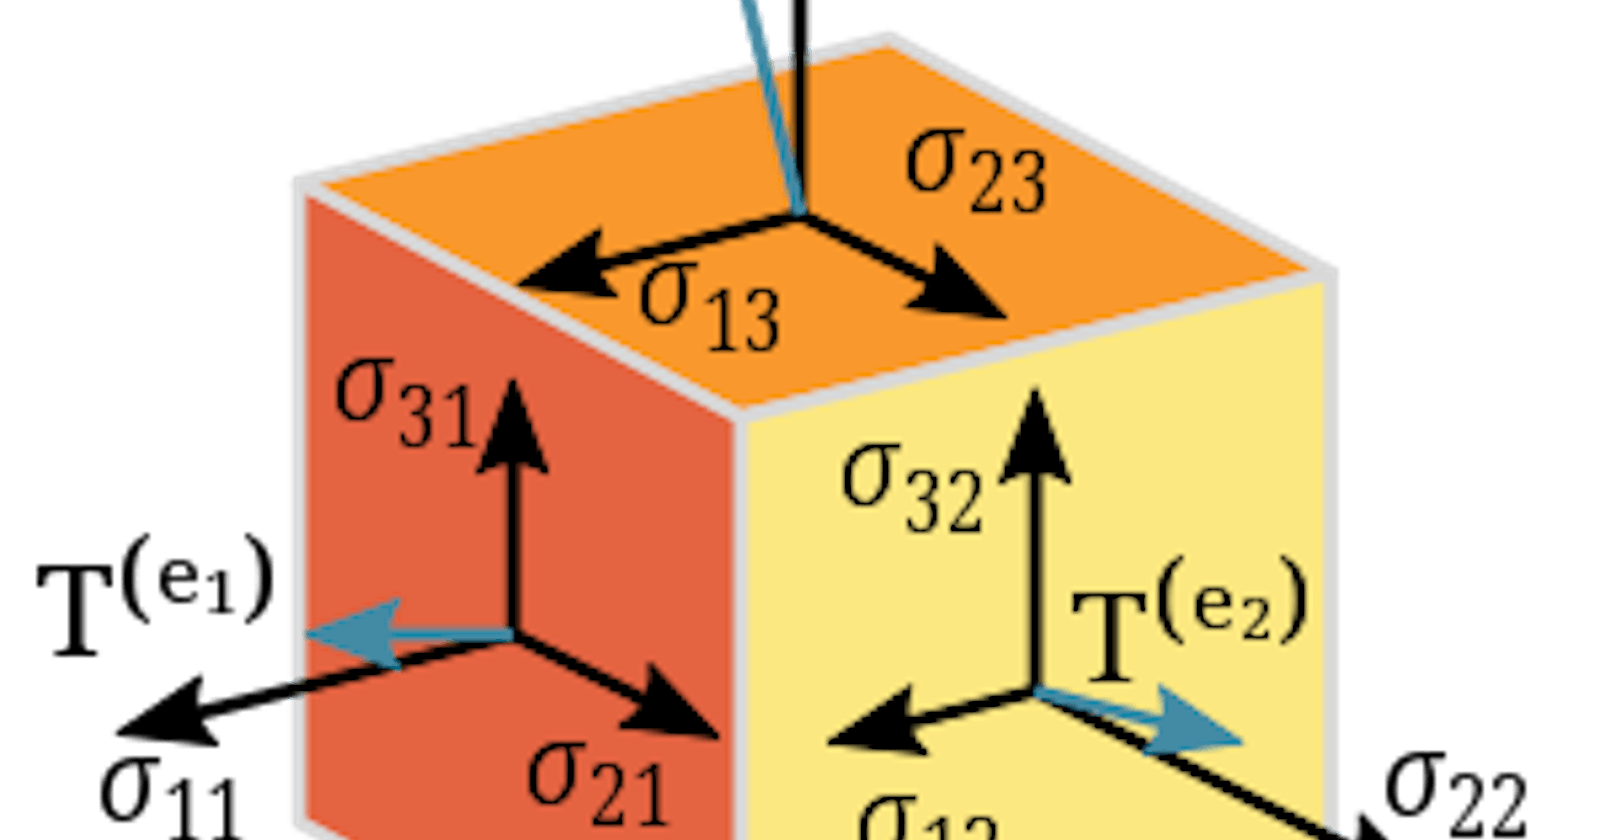 Understanding Tensors in TensorFlow: The Building Blocks of Higher-Dimensional Data